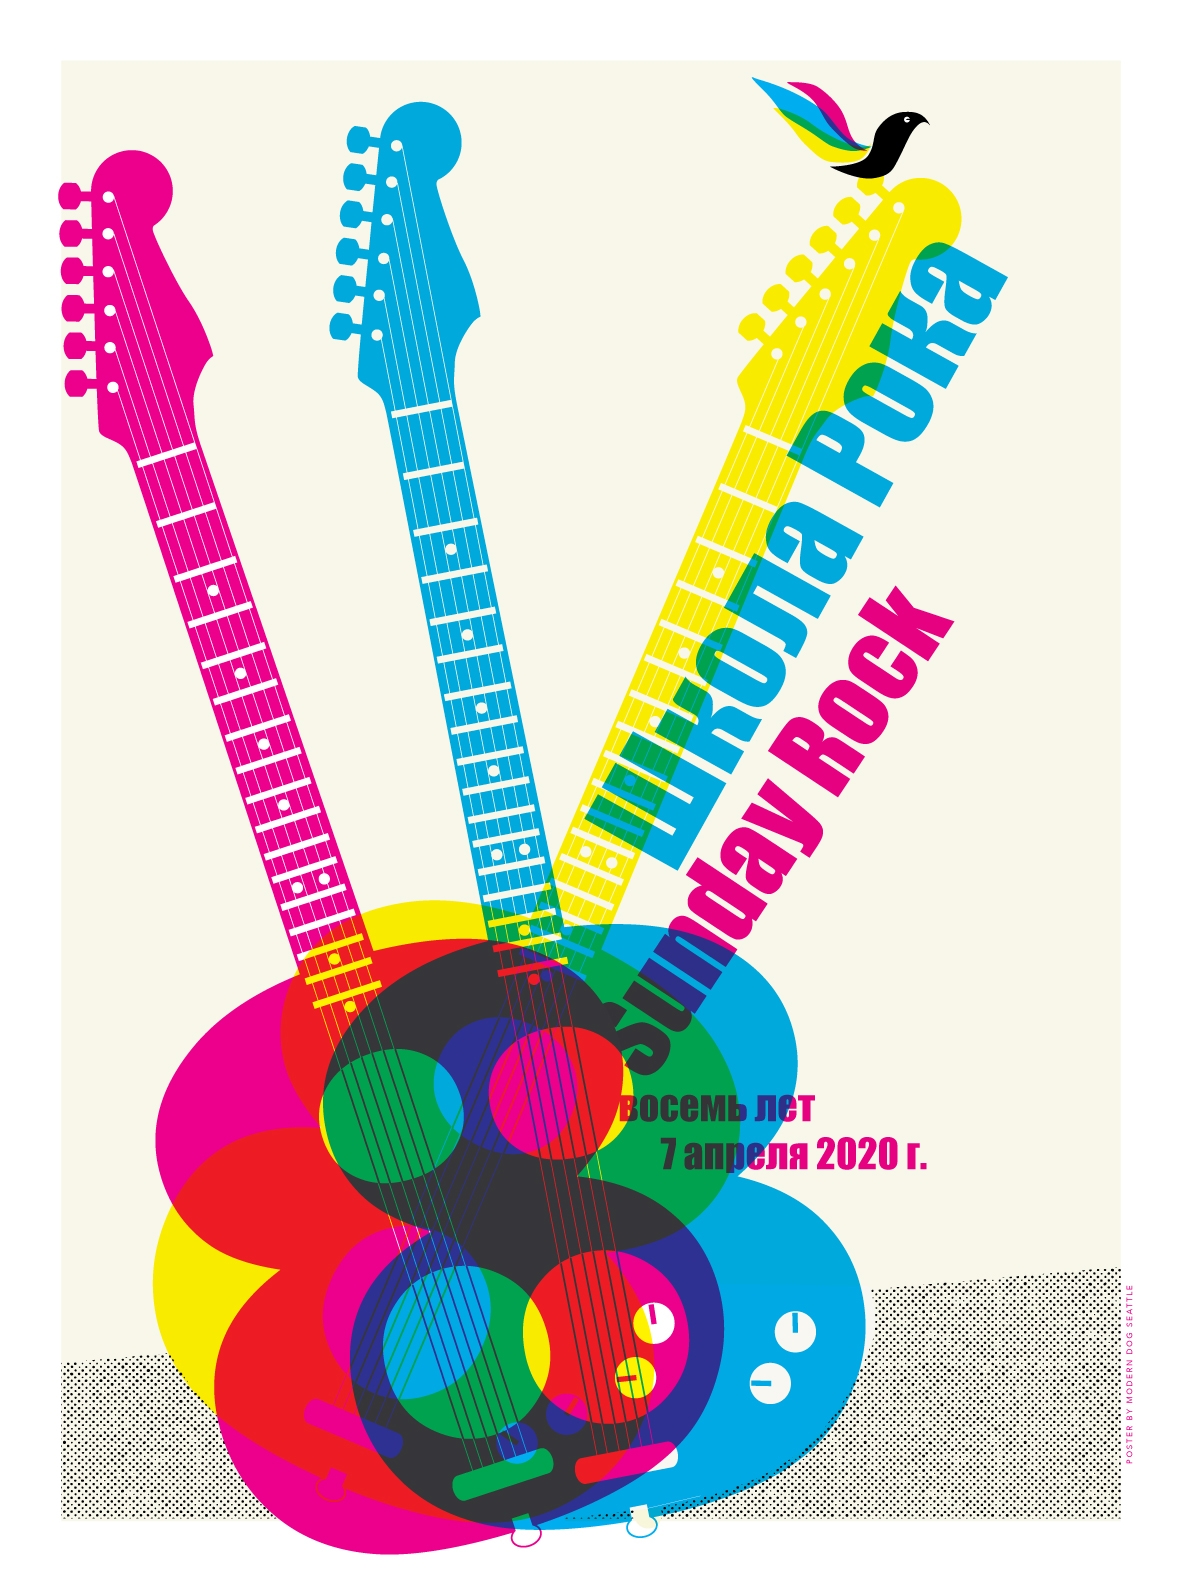 School of Rock's 8th Anniversary Poster